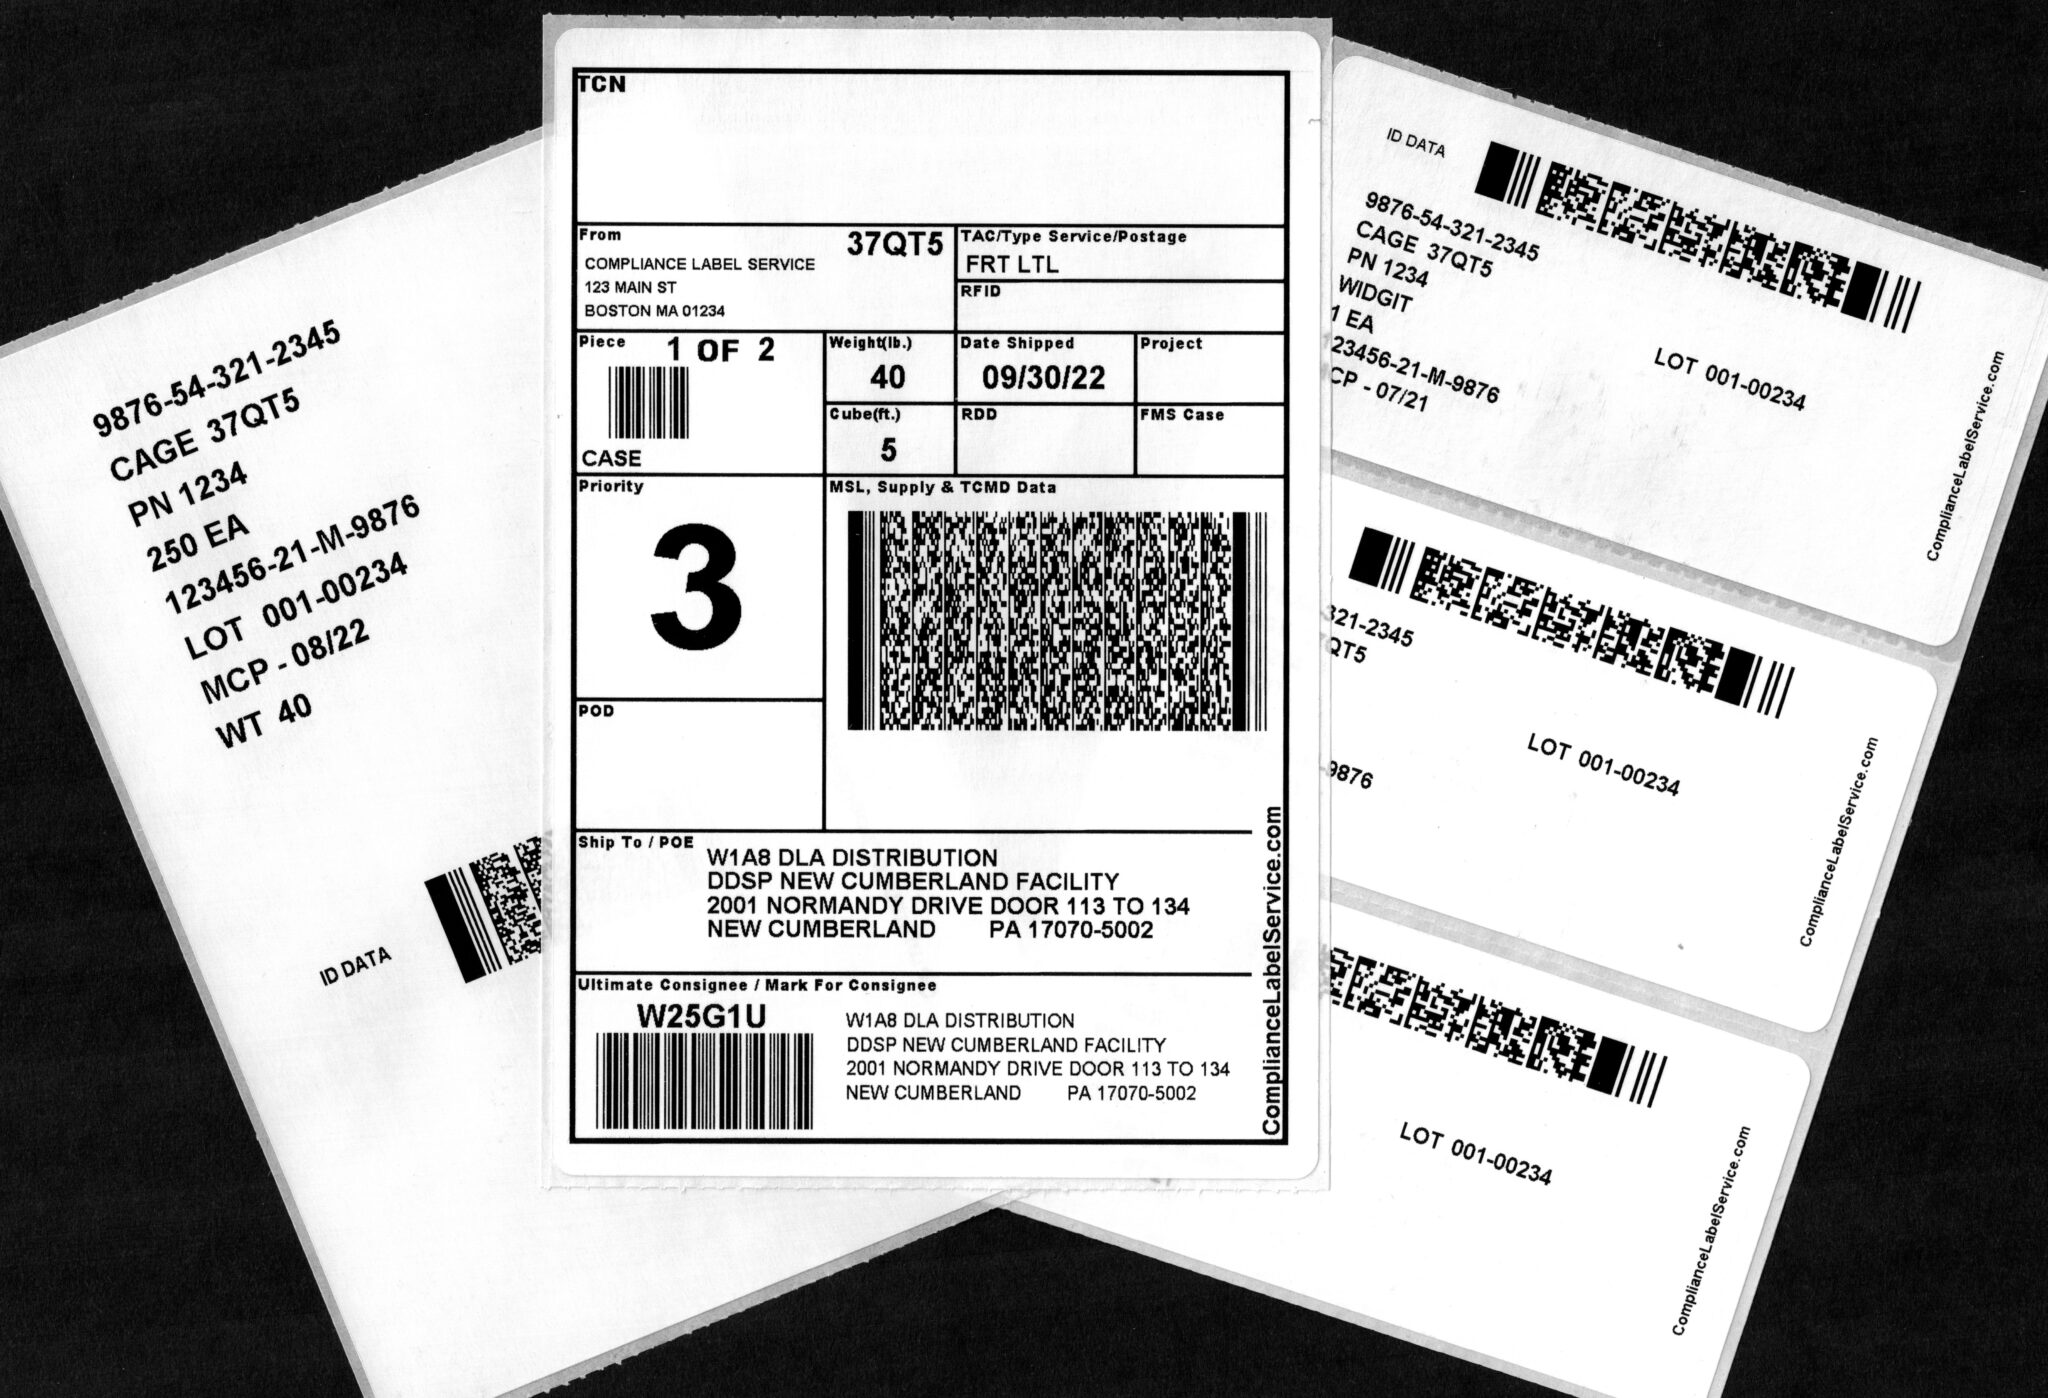 MIL STD 129 Documents Resources Compliance Label Service